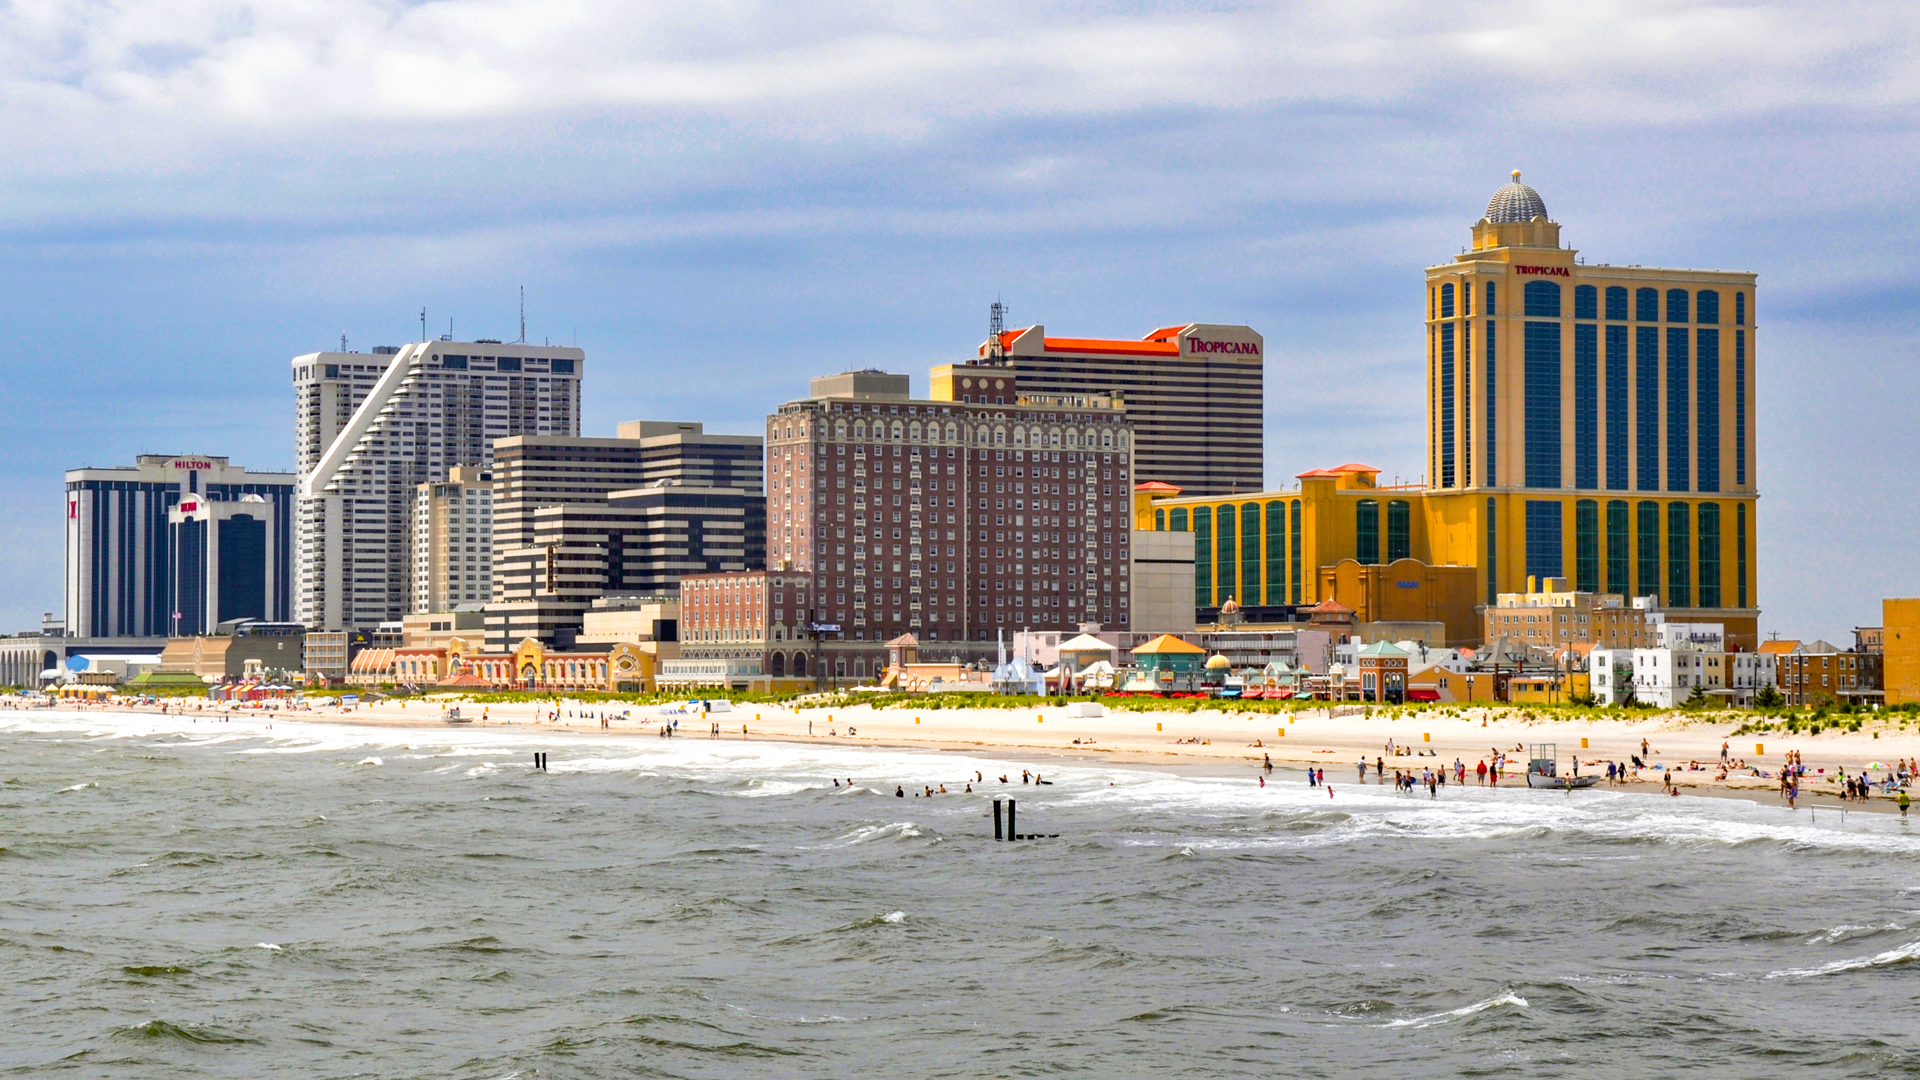 Skyline of Atlantic City